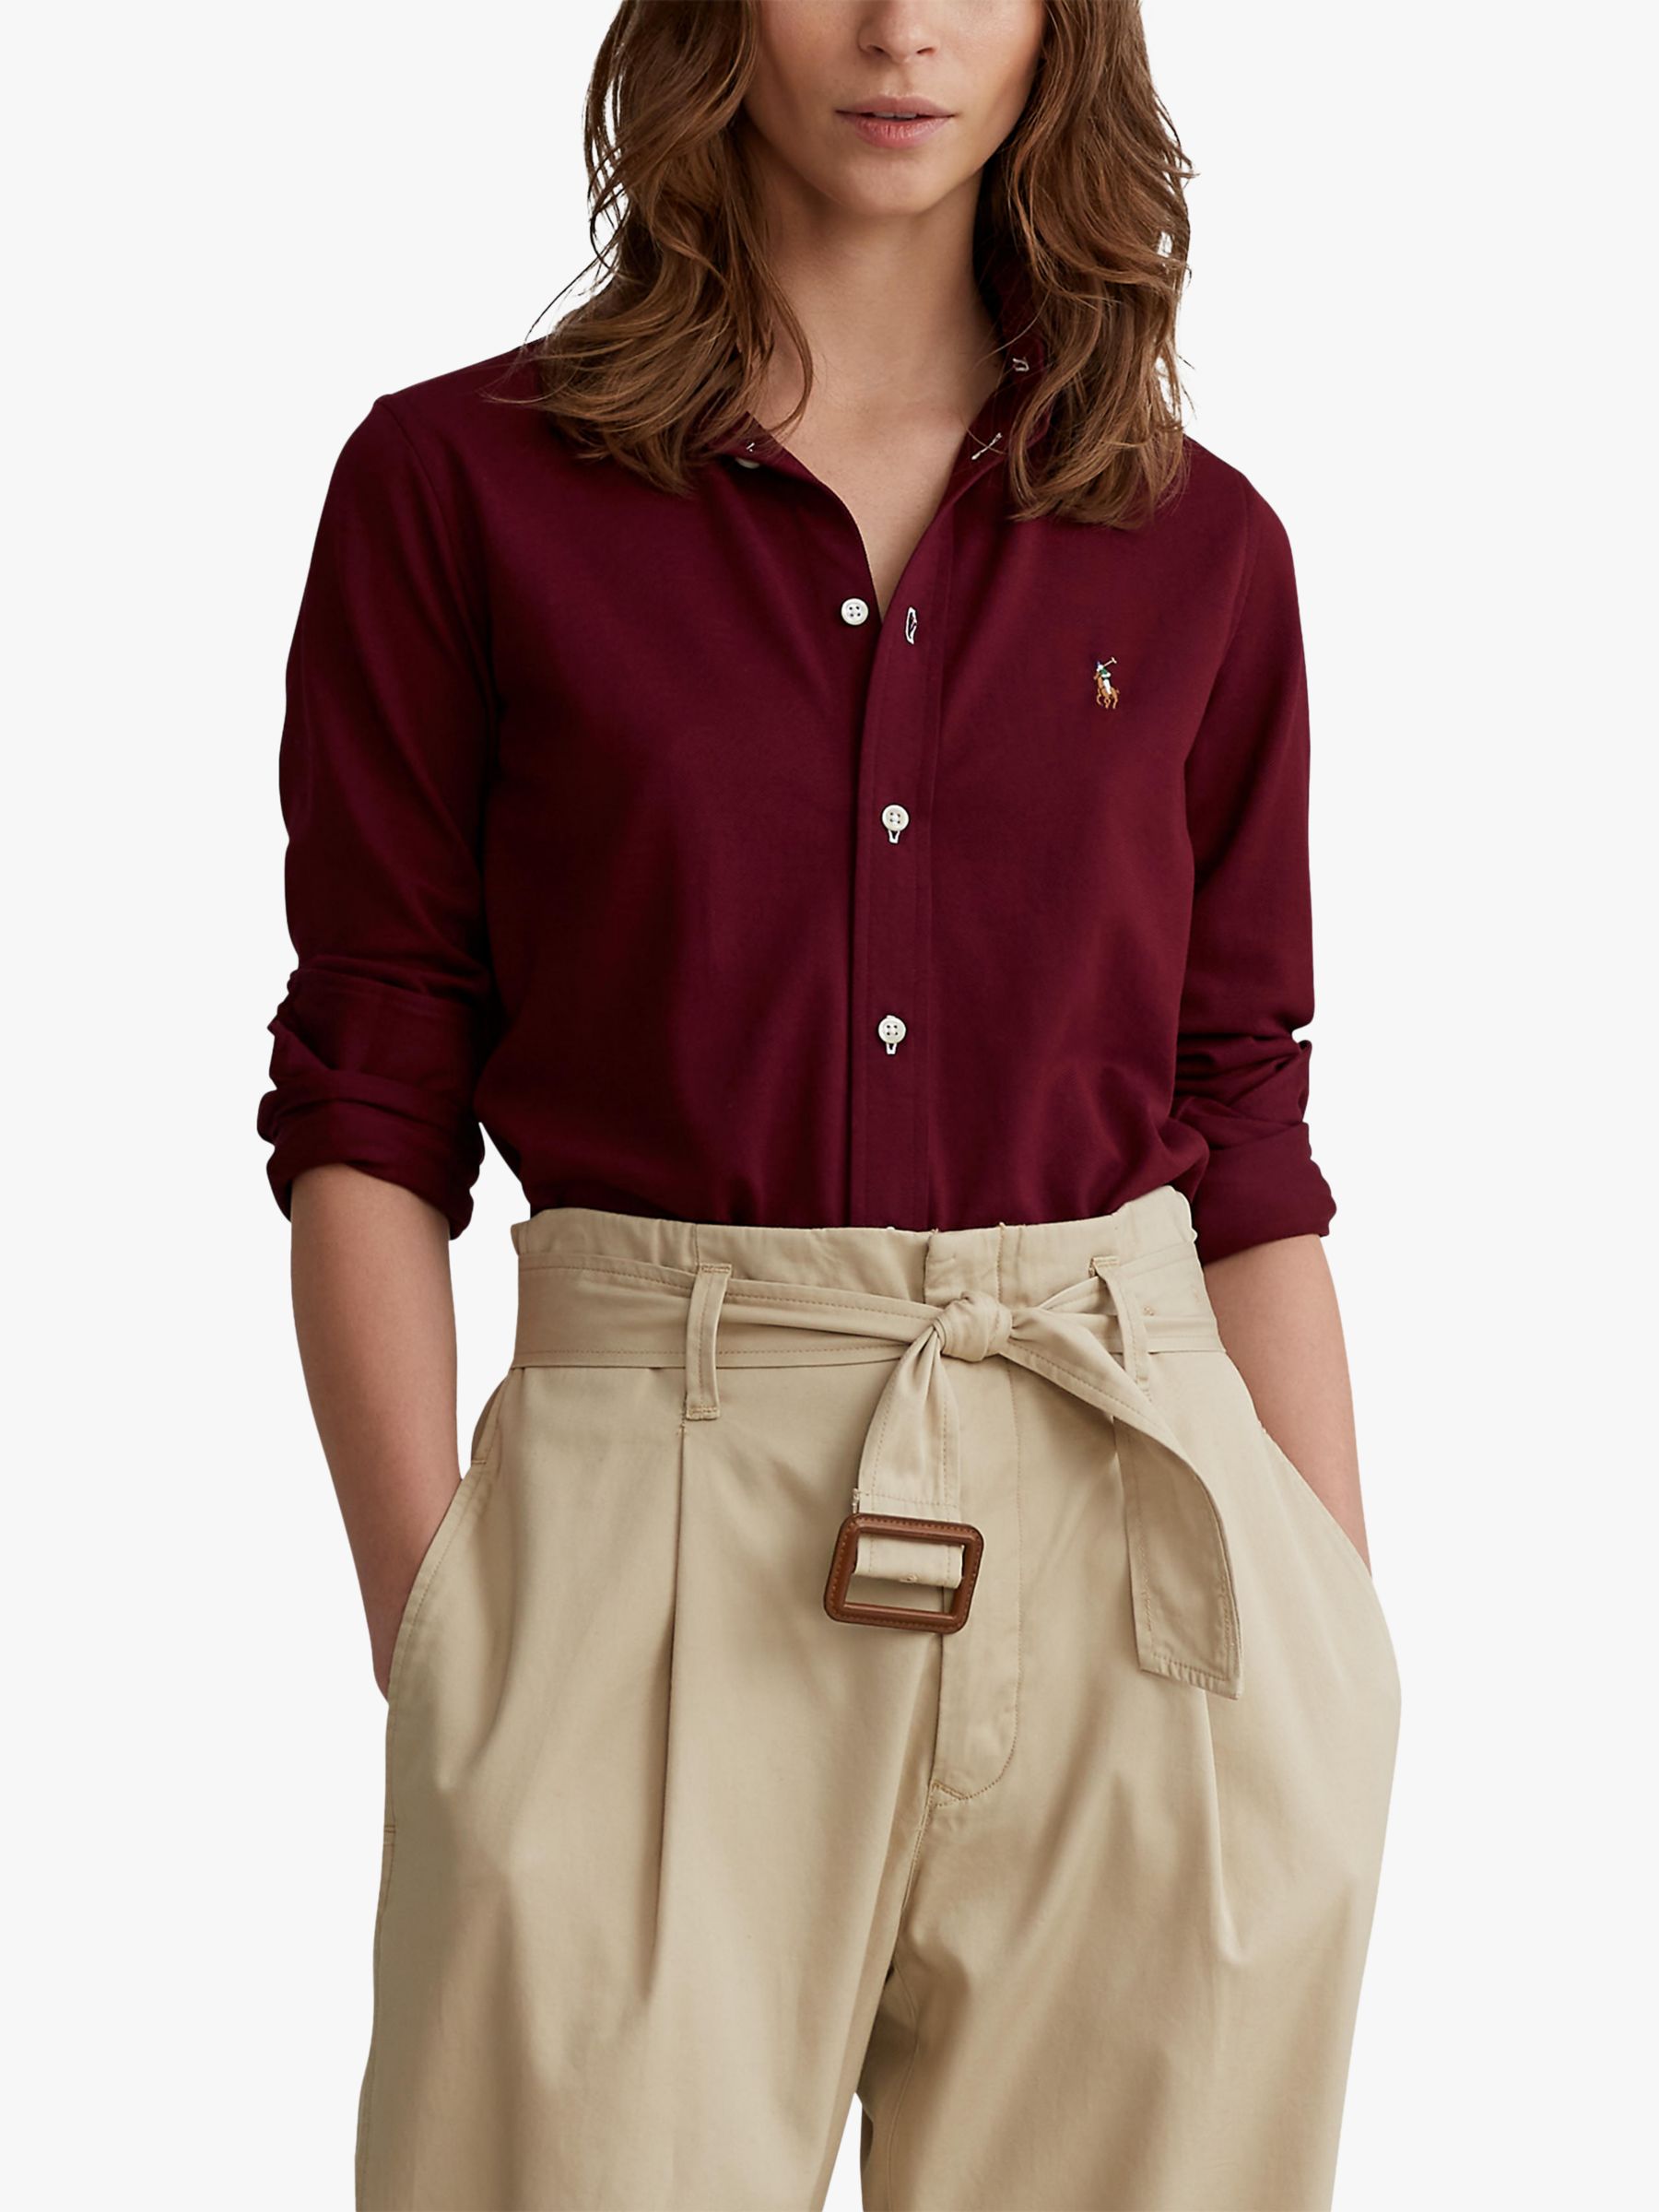 Polo Ralph Lauren Heidi Knit Cotton Oxford Shirt, Monarch Red, XXL